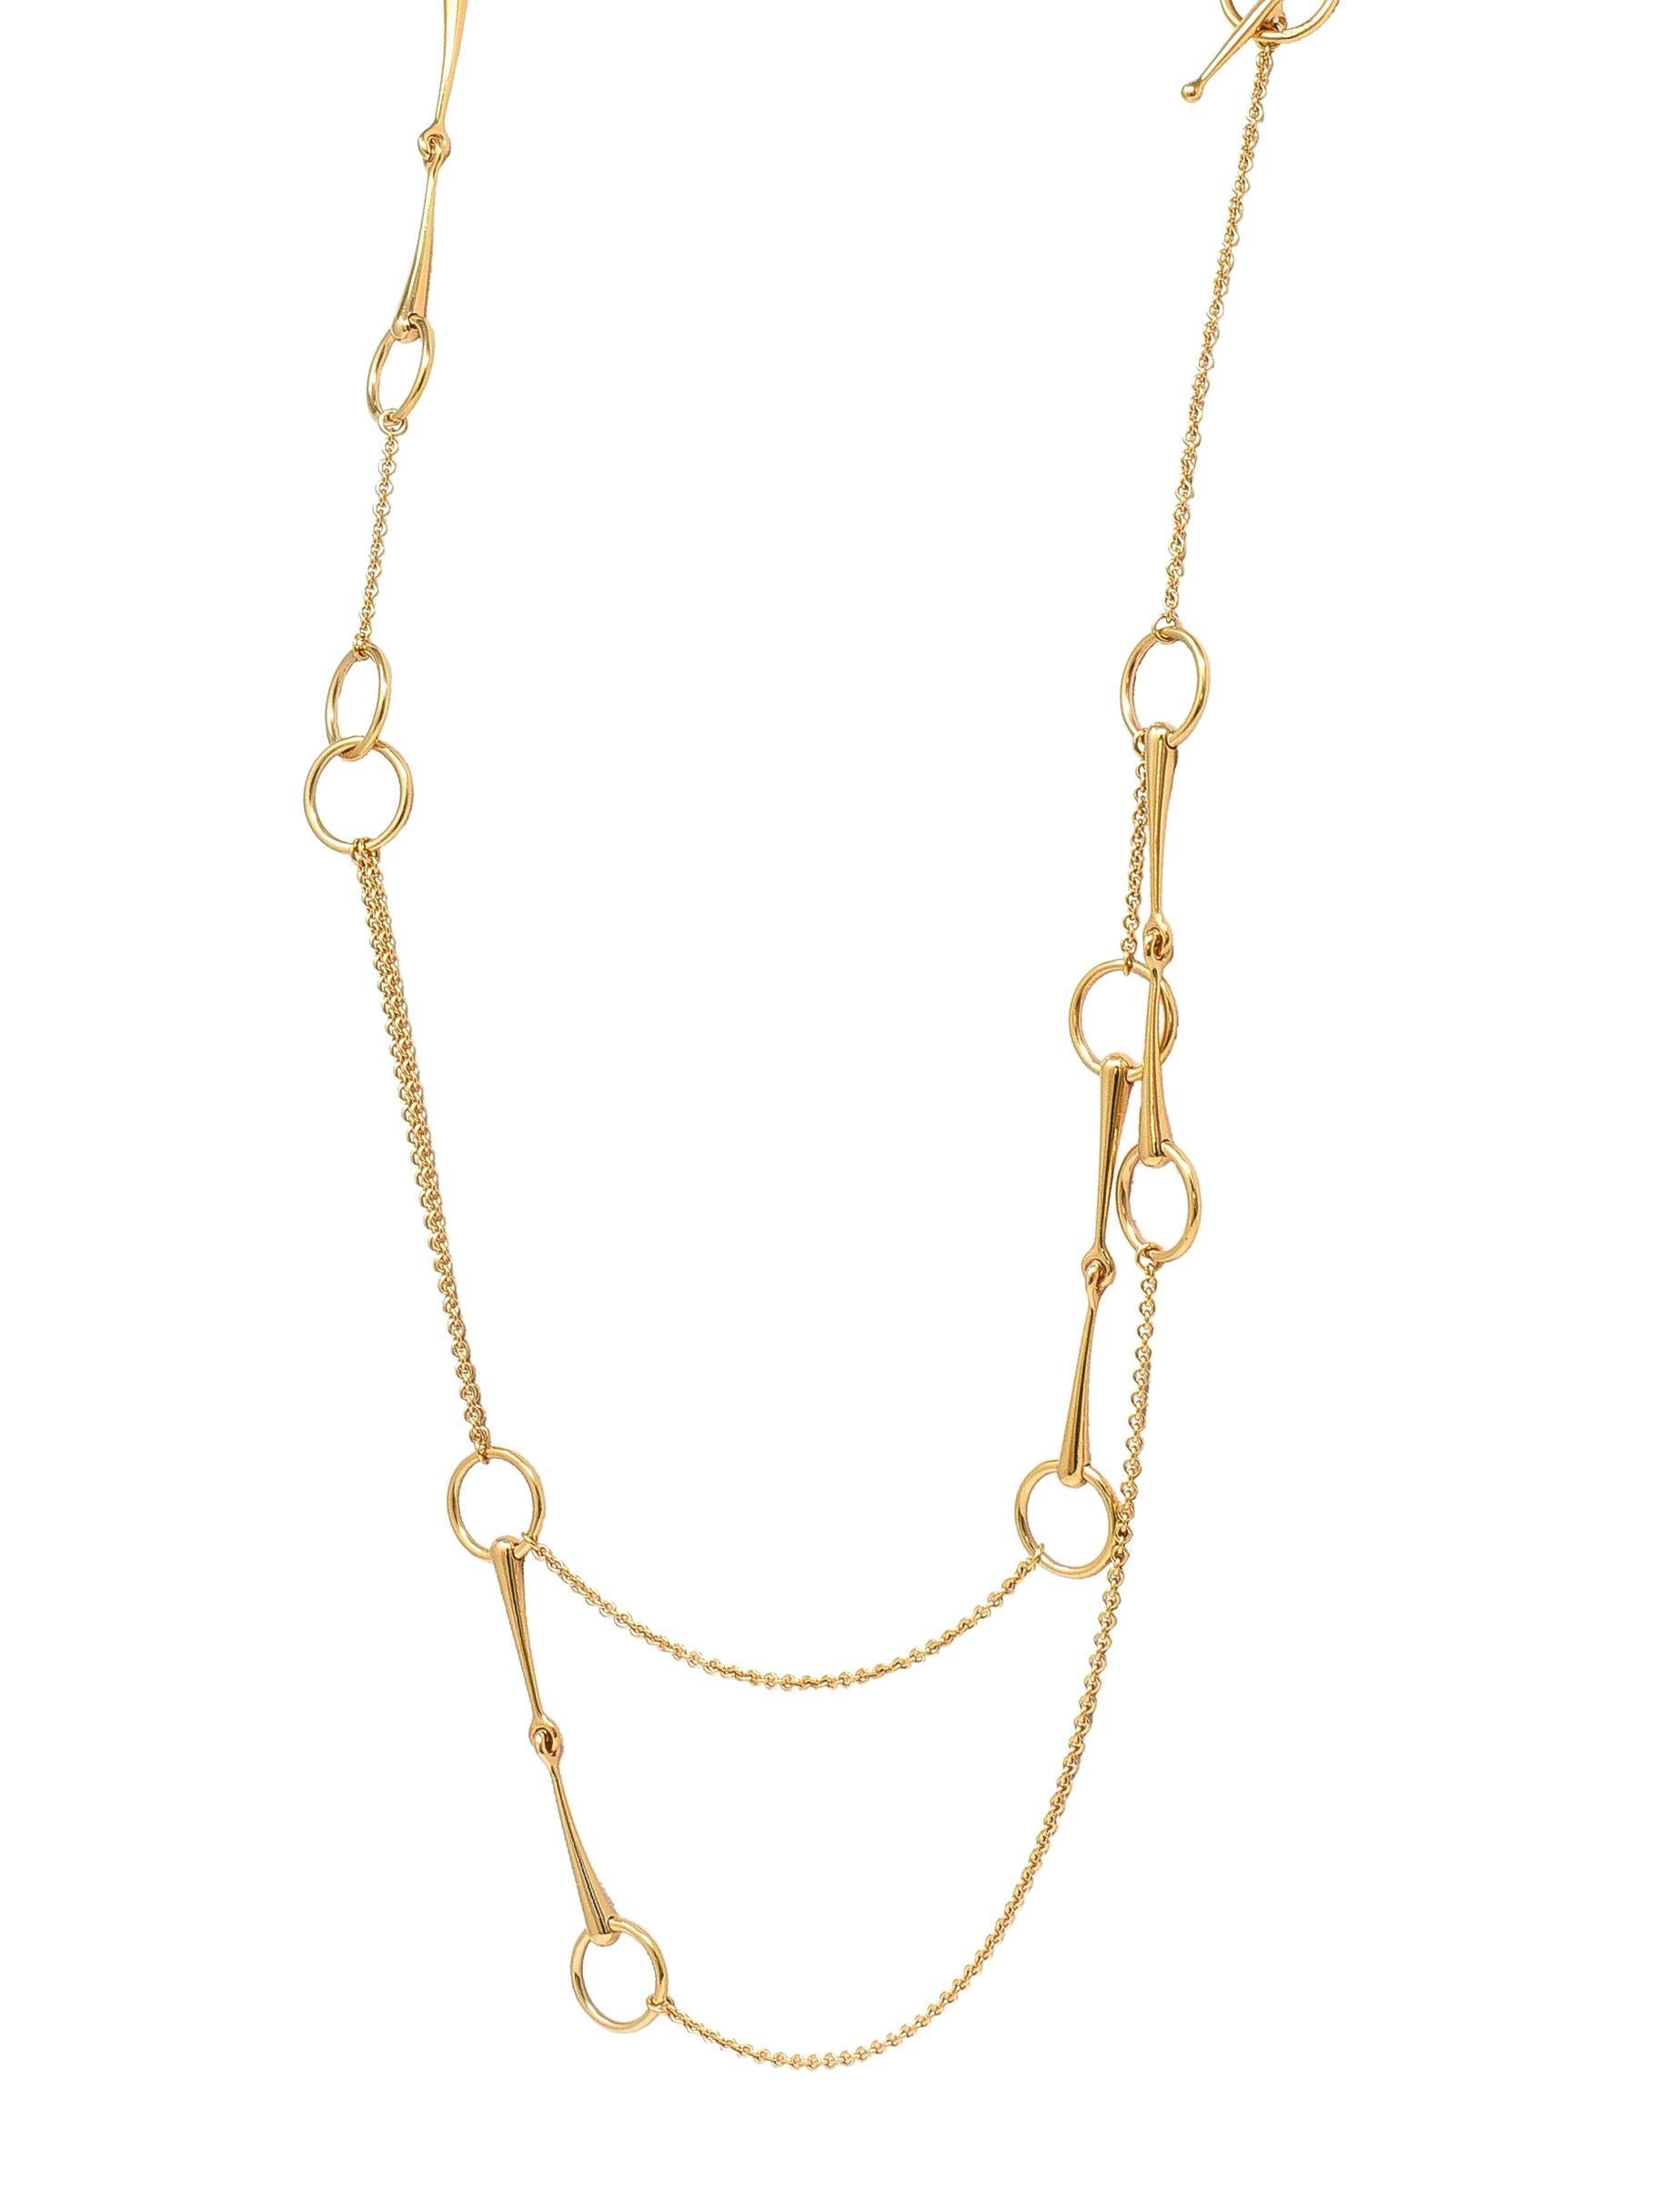 Women's or Men's Hermés Contemporary 18 Karat Yellow Gold Filet d'Or Horse-Bit Link Necklace